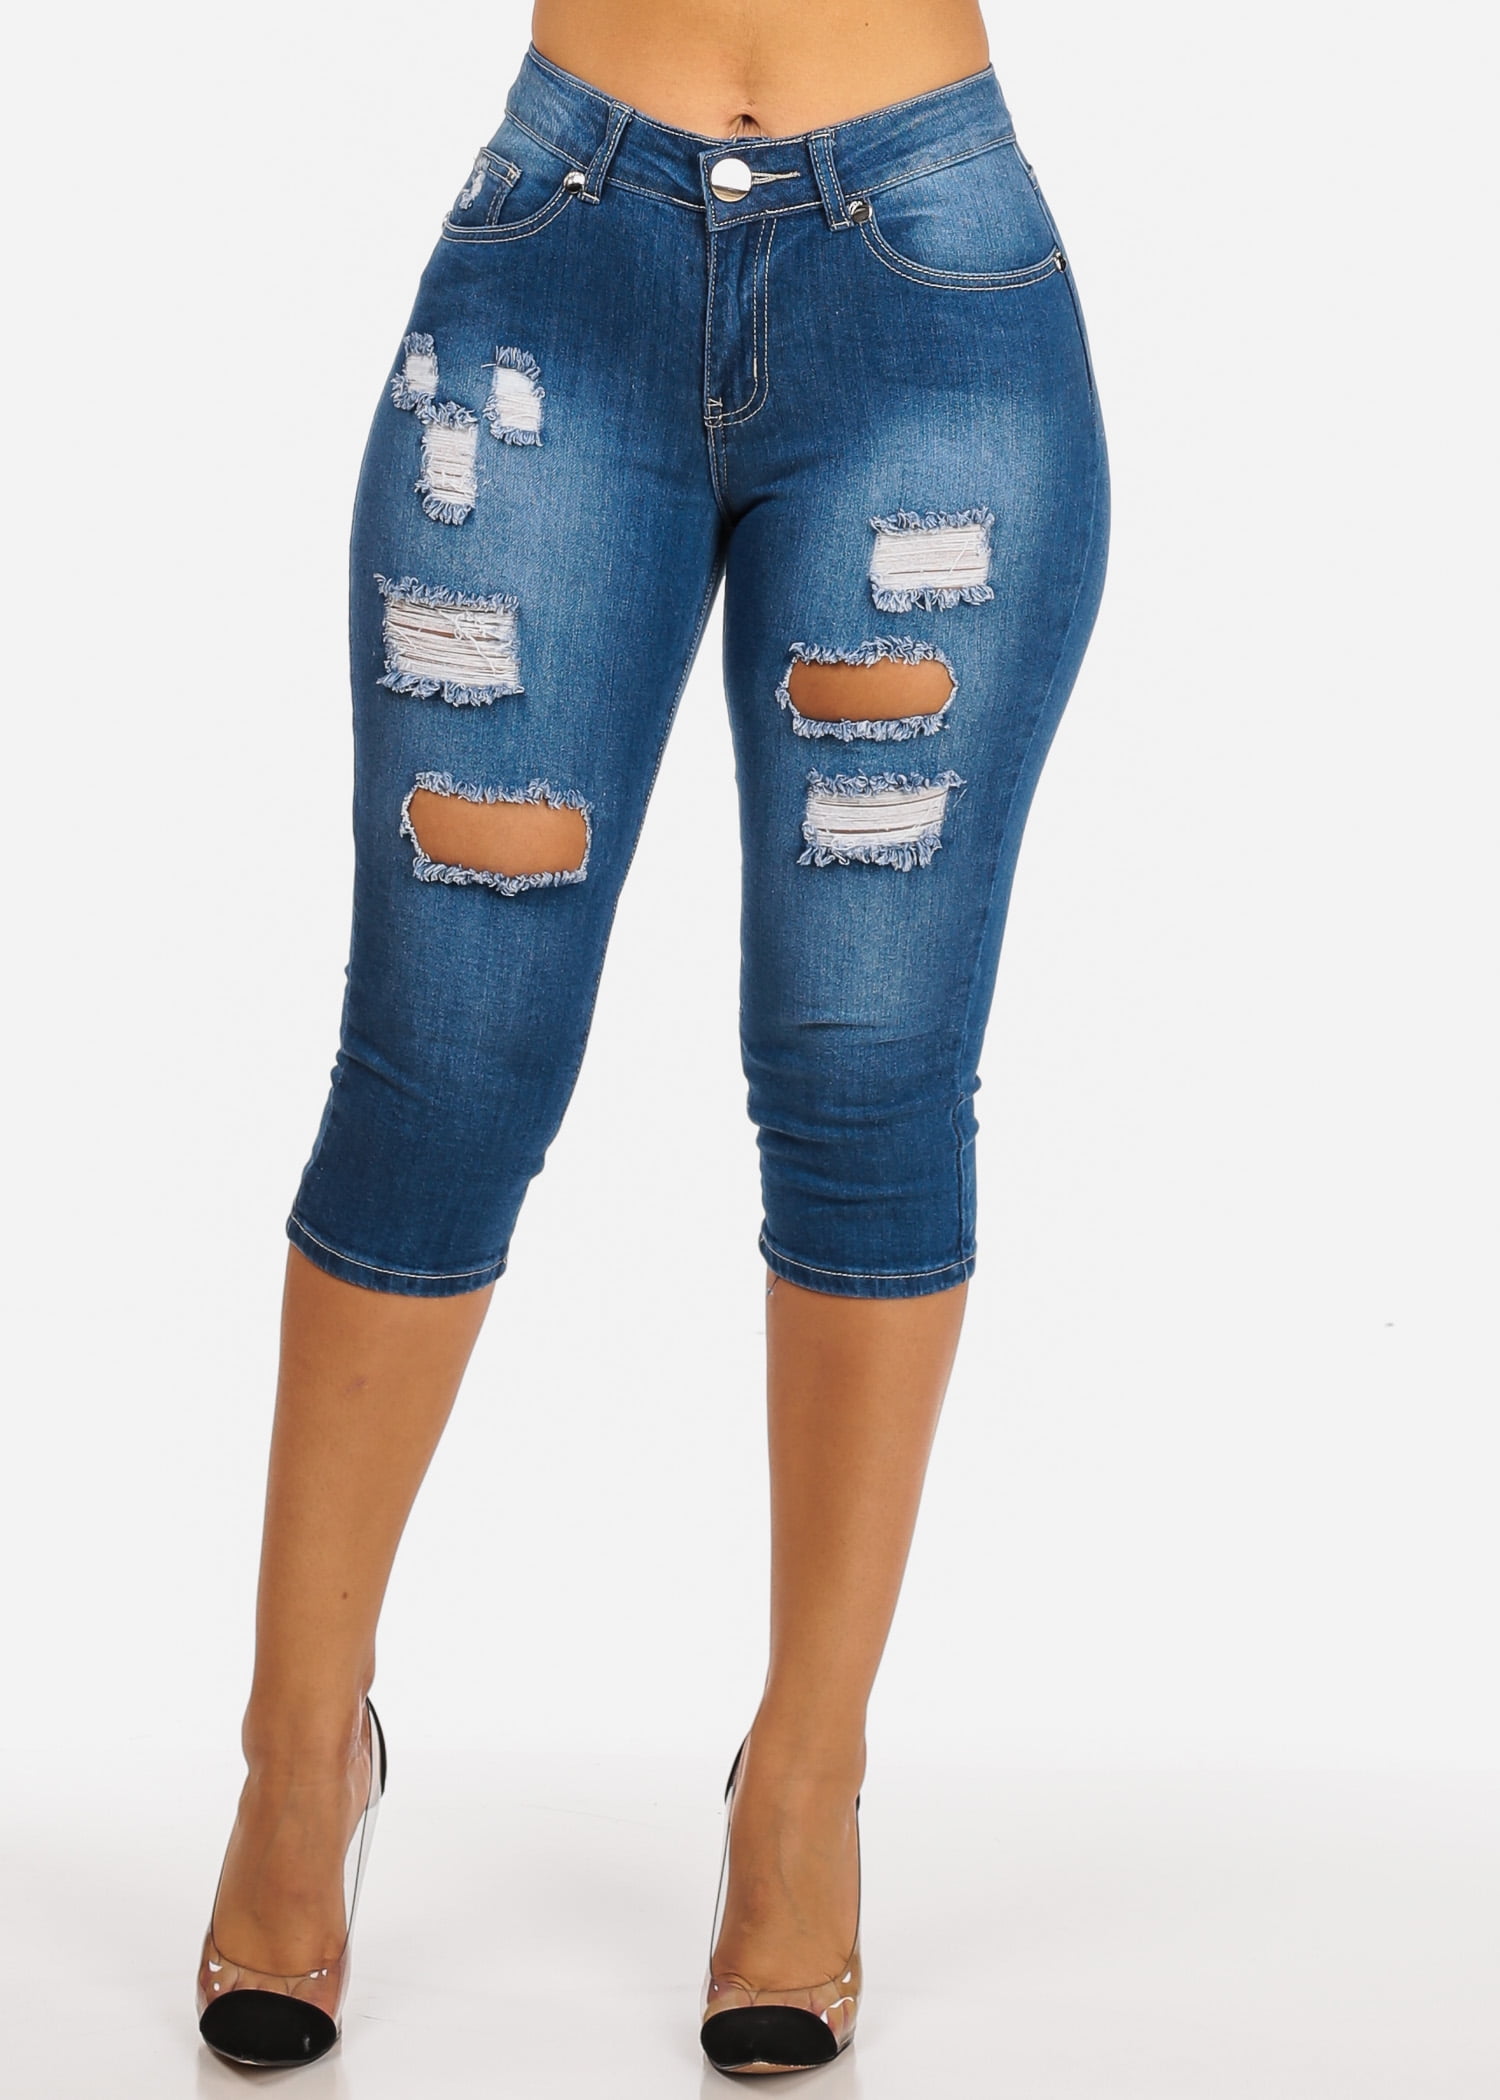 capri distressed jeans